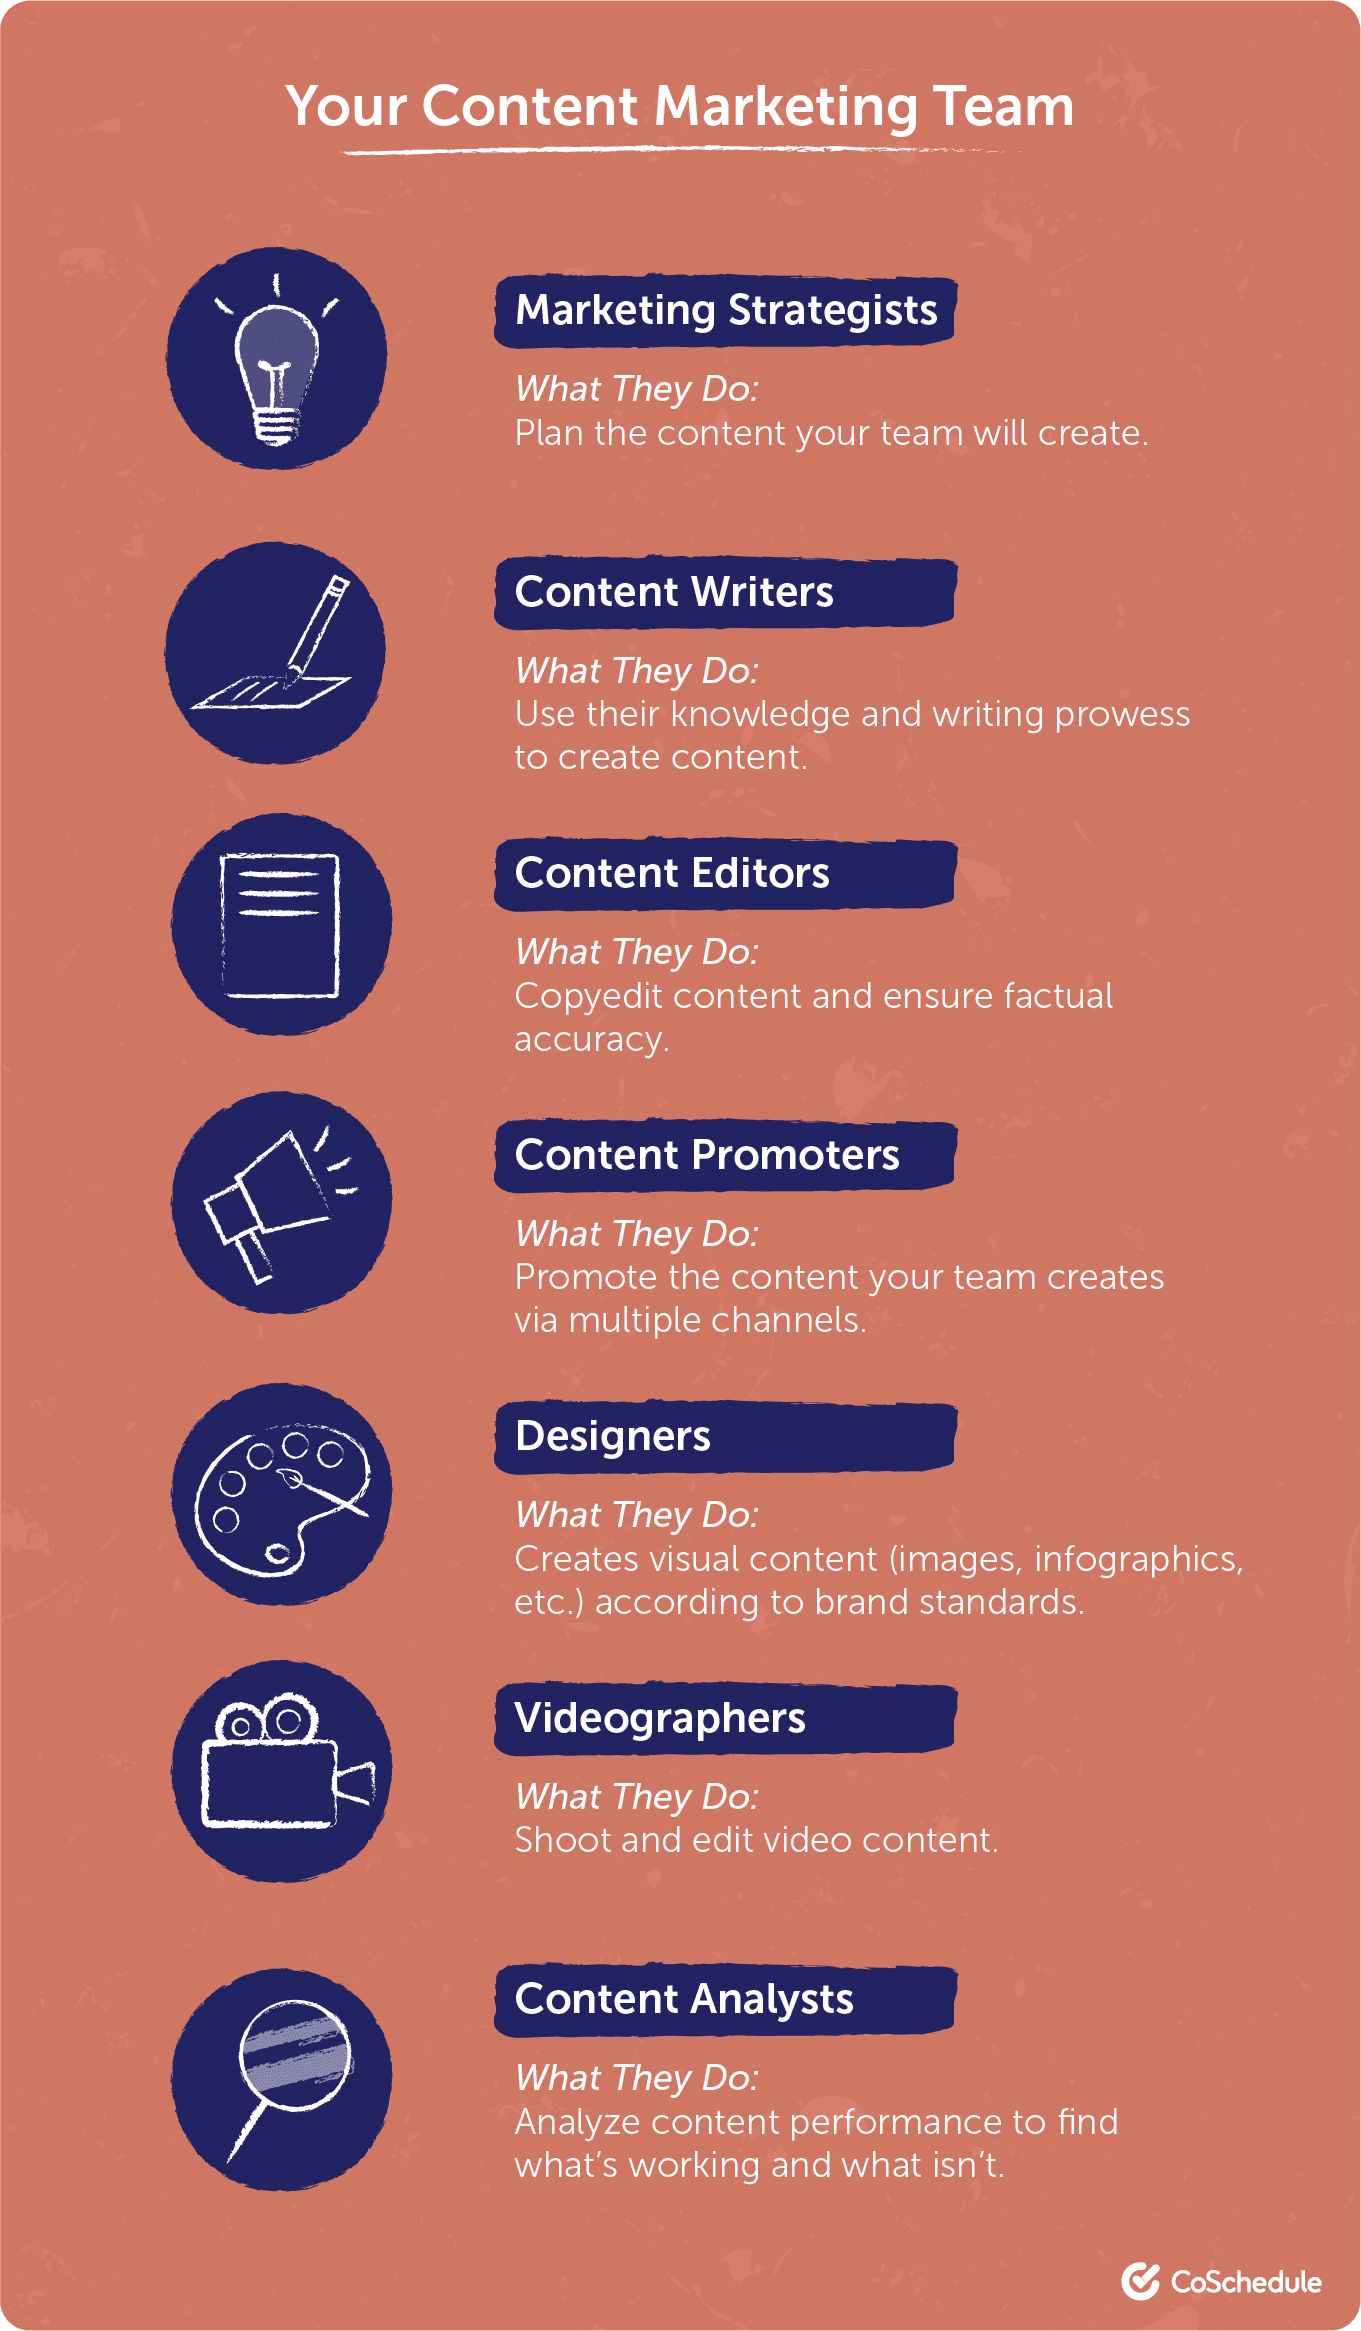 Content marketing team roles